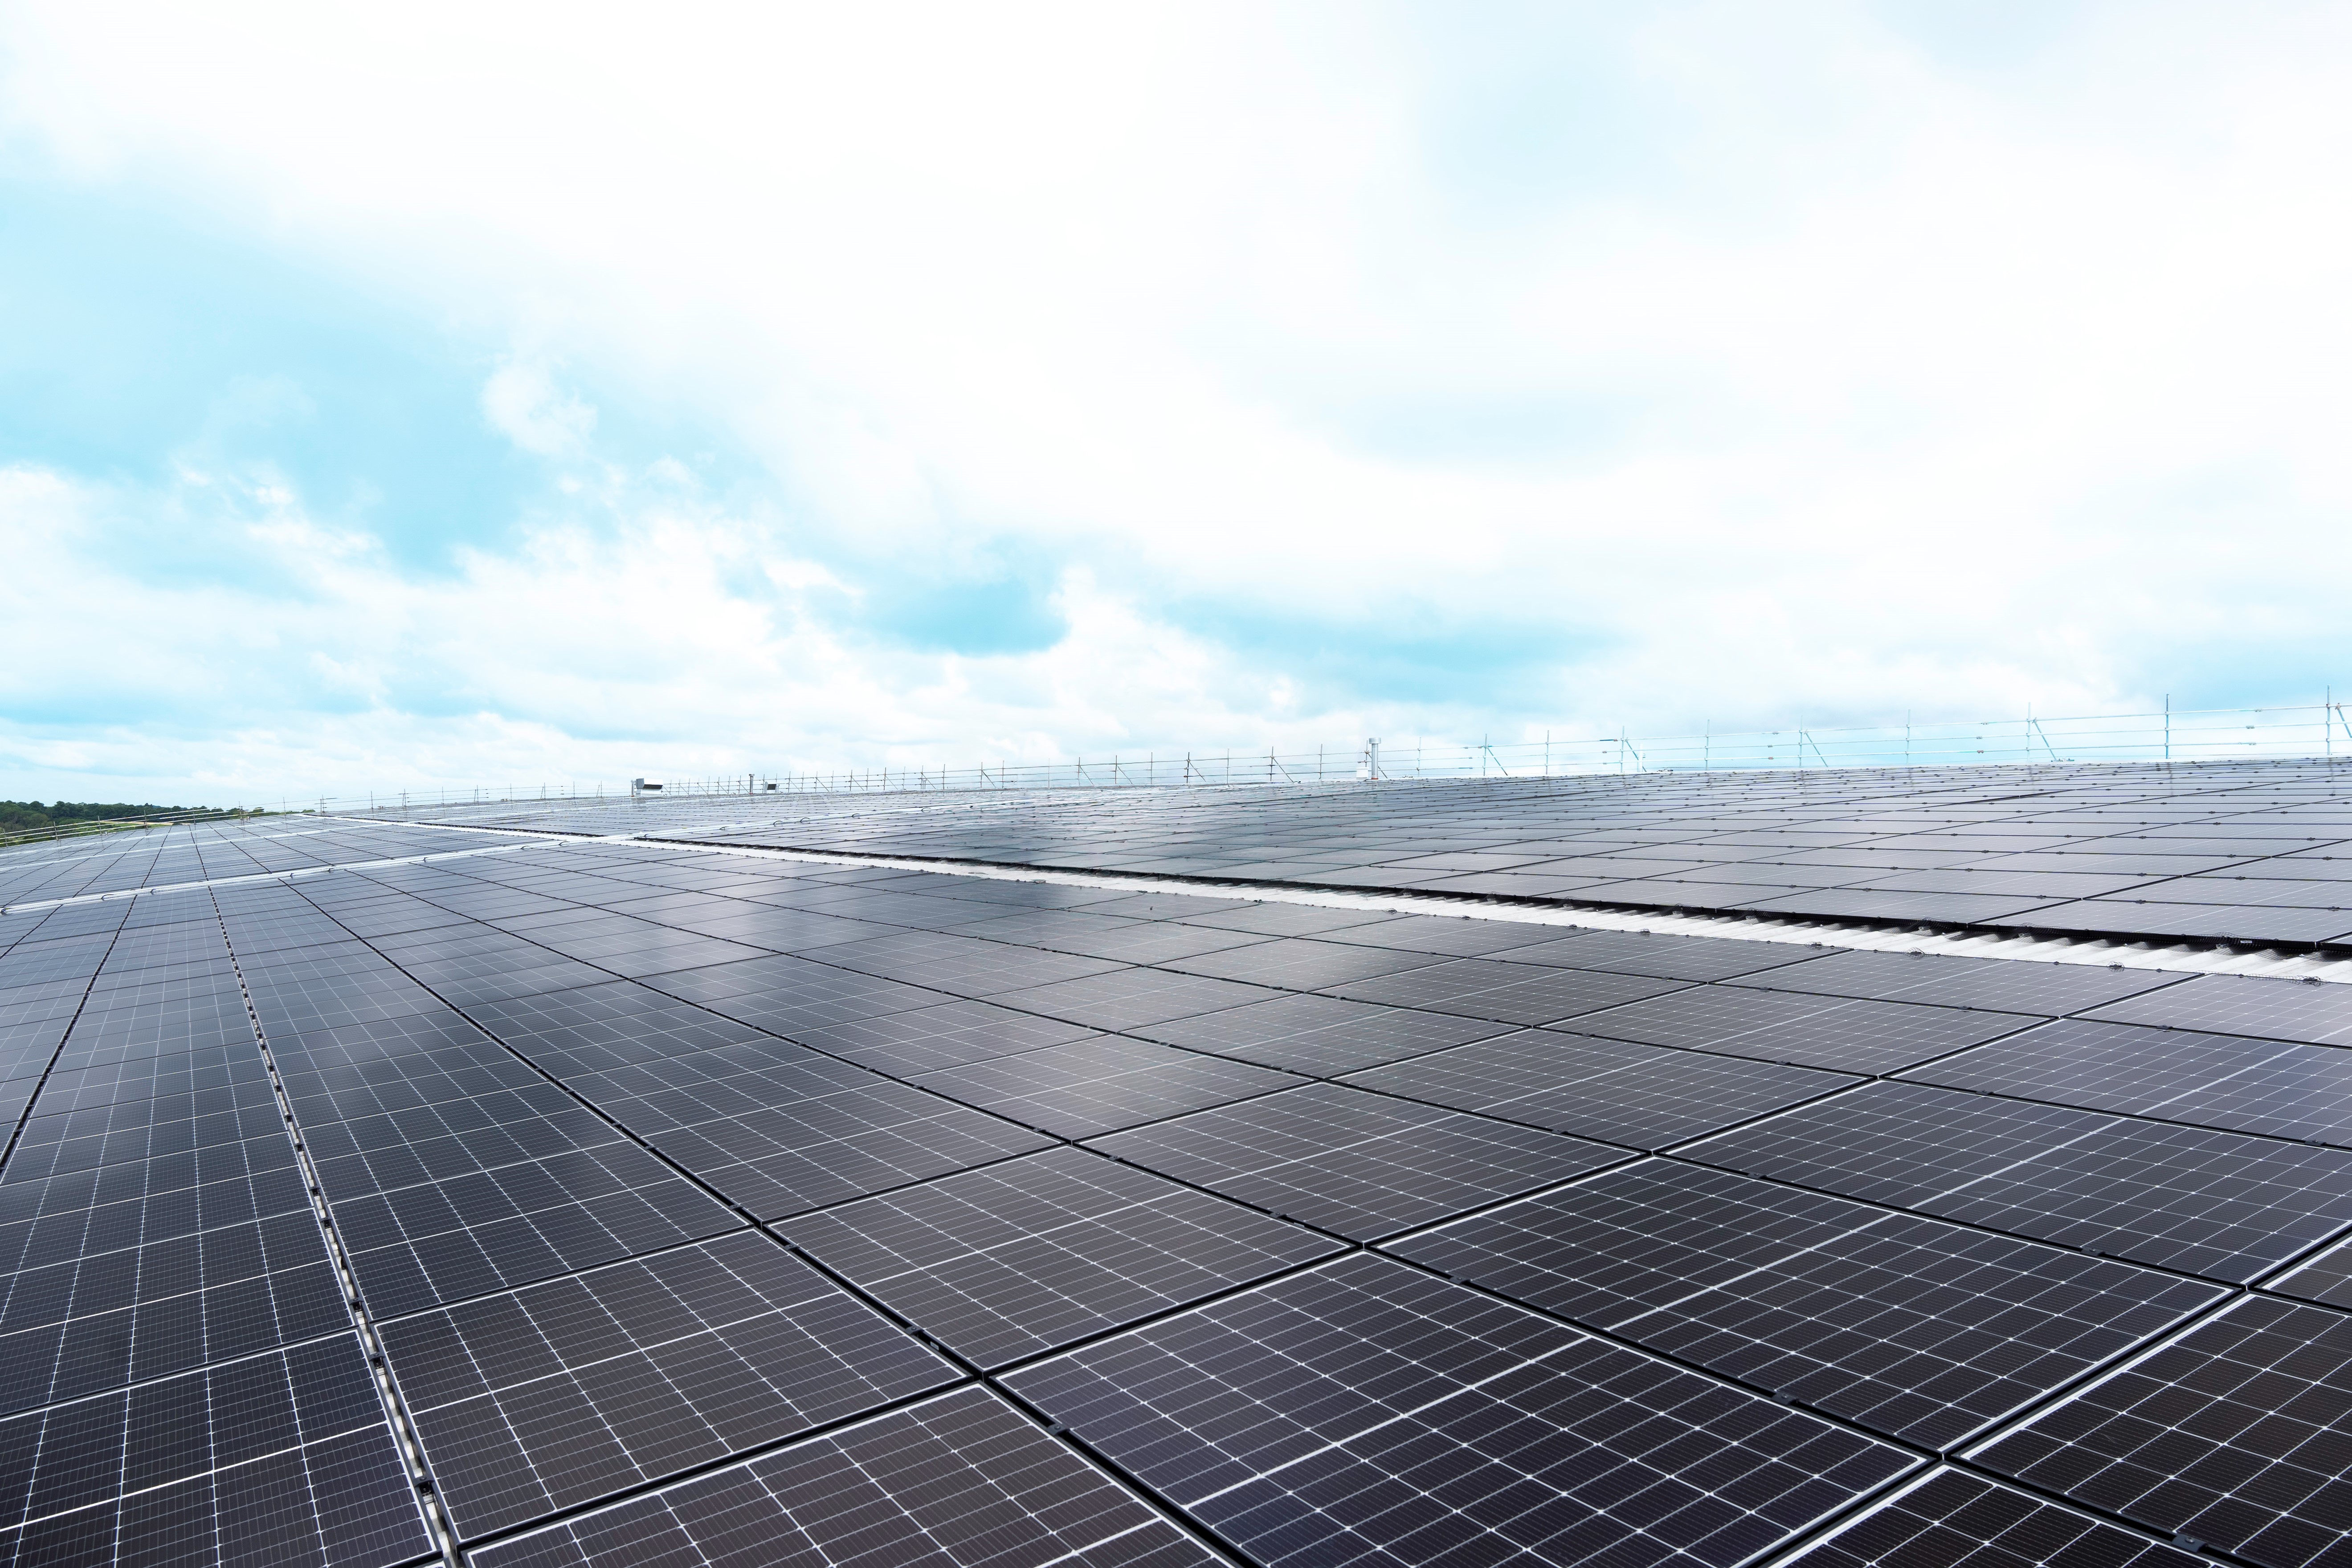 The London Biggin Hill service centre's solar panel project developed in collaboration with Zestec.